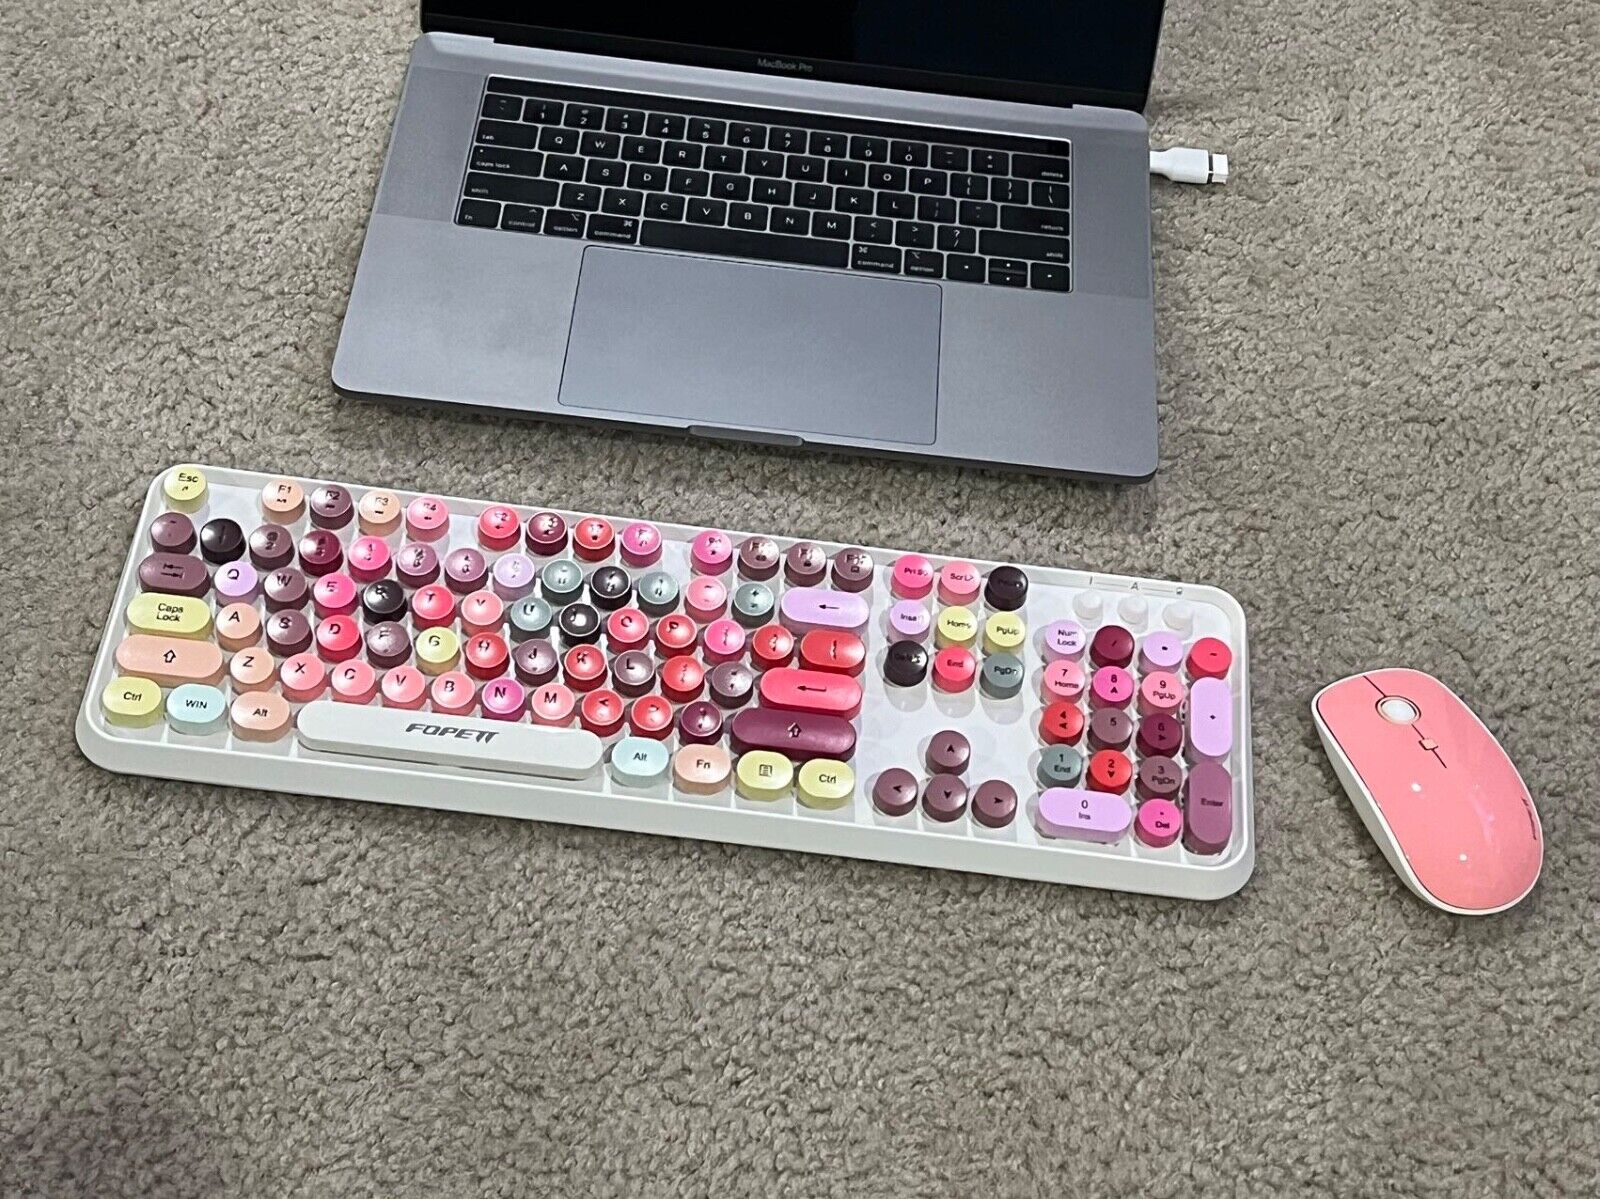 NEW colorful beautiful wireless keyboard and  mouse bundles